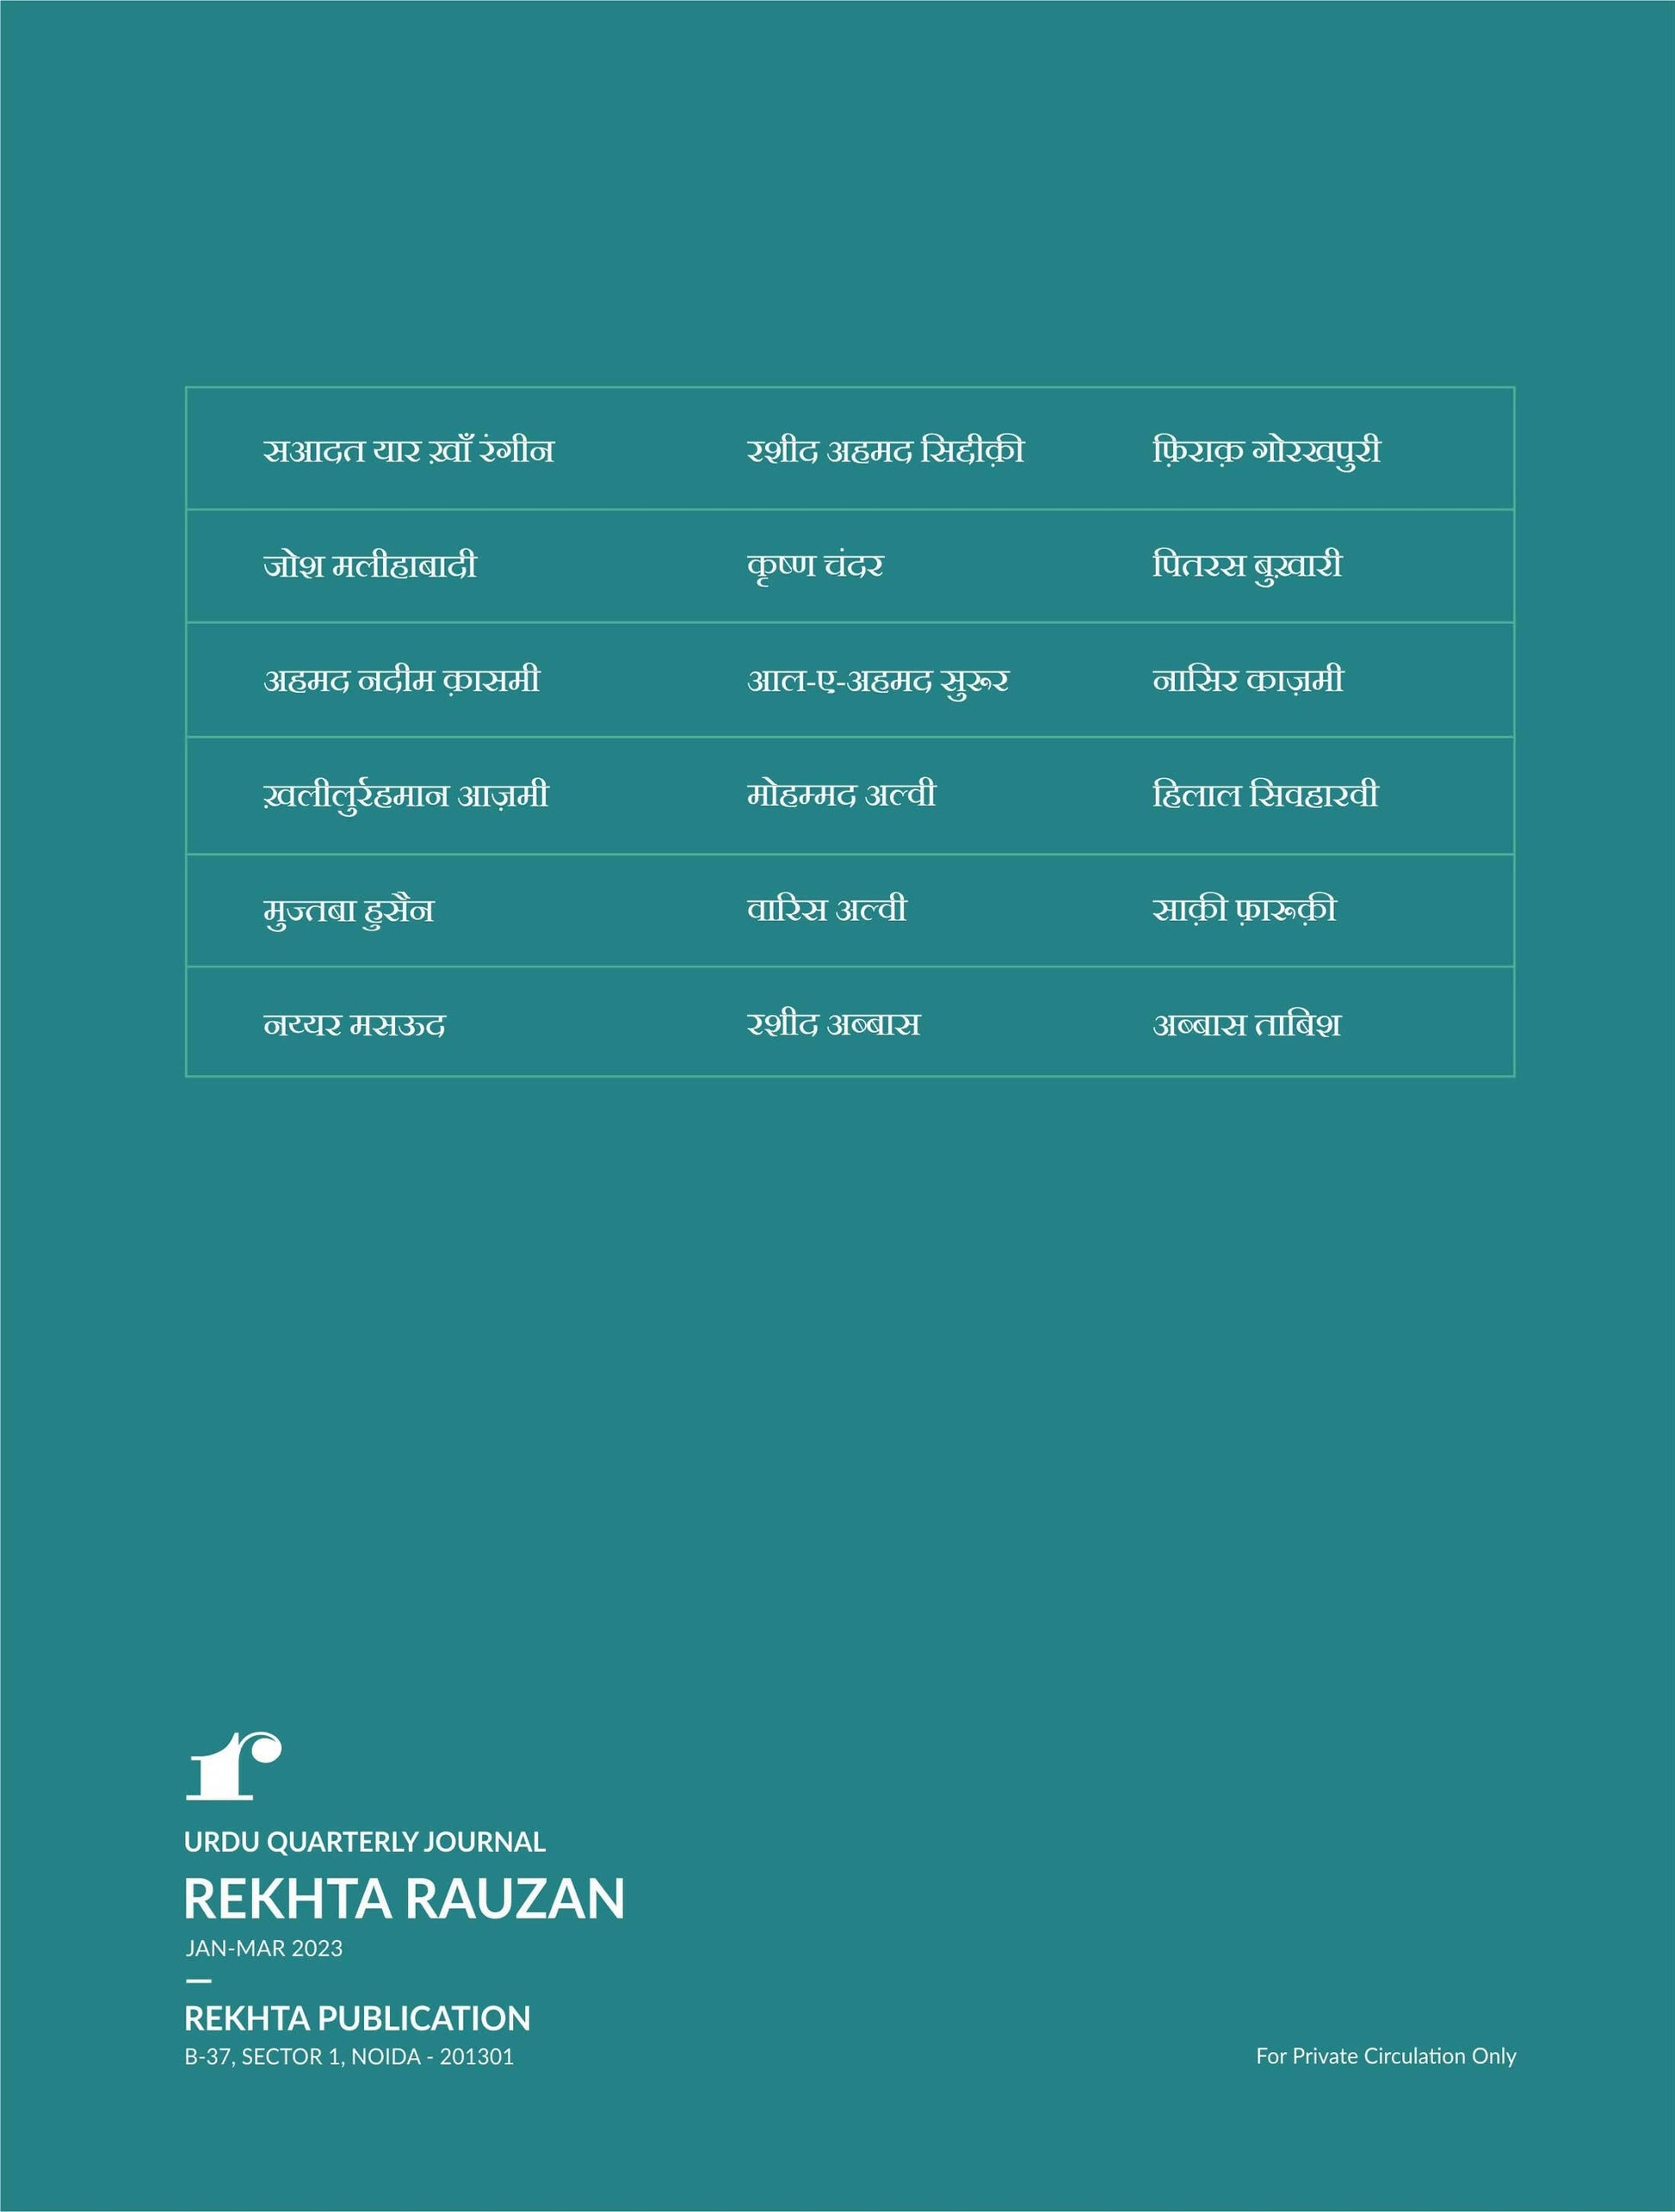 Rekhta Rauzan 7th Ed, Hindi